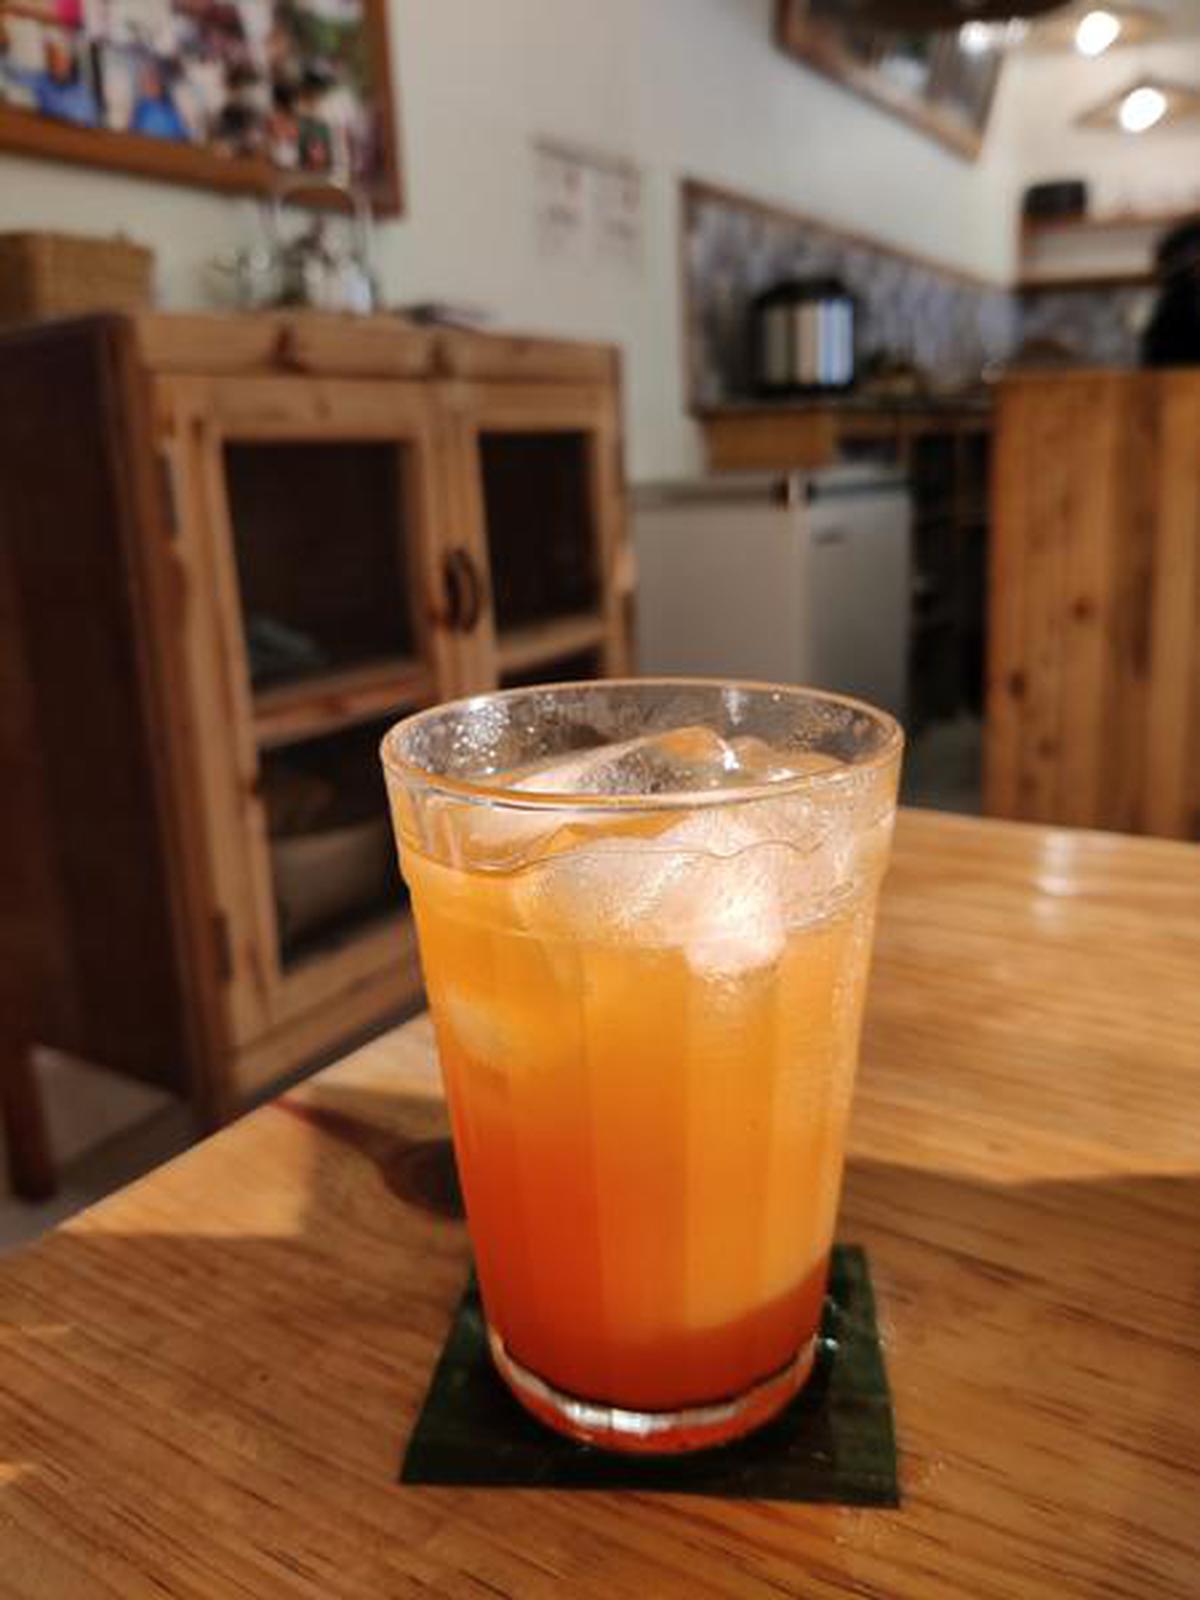 Ice Sumac berry at Dweller’s tea cafe in Imphal